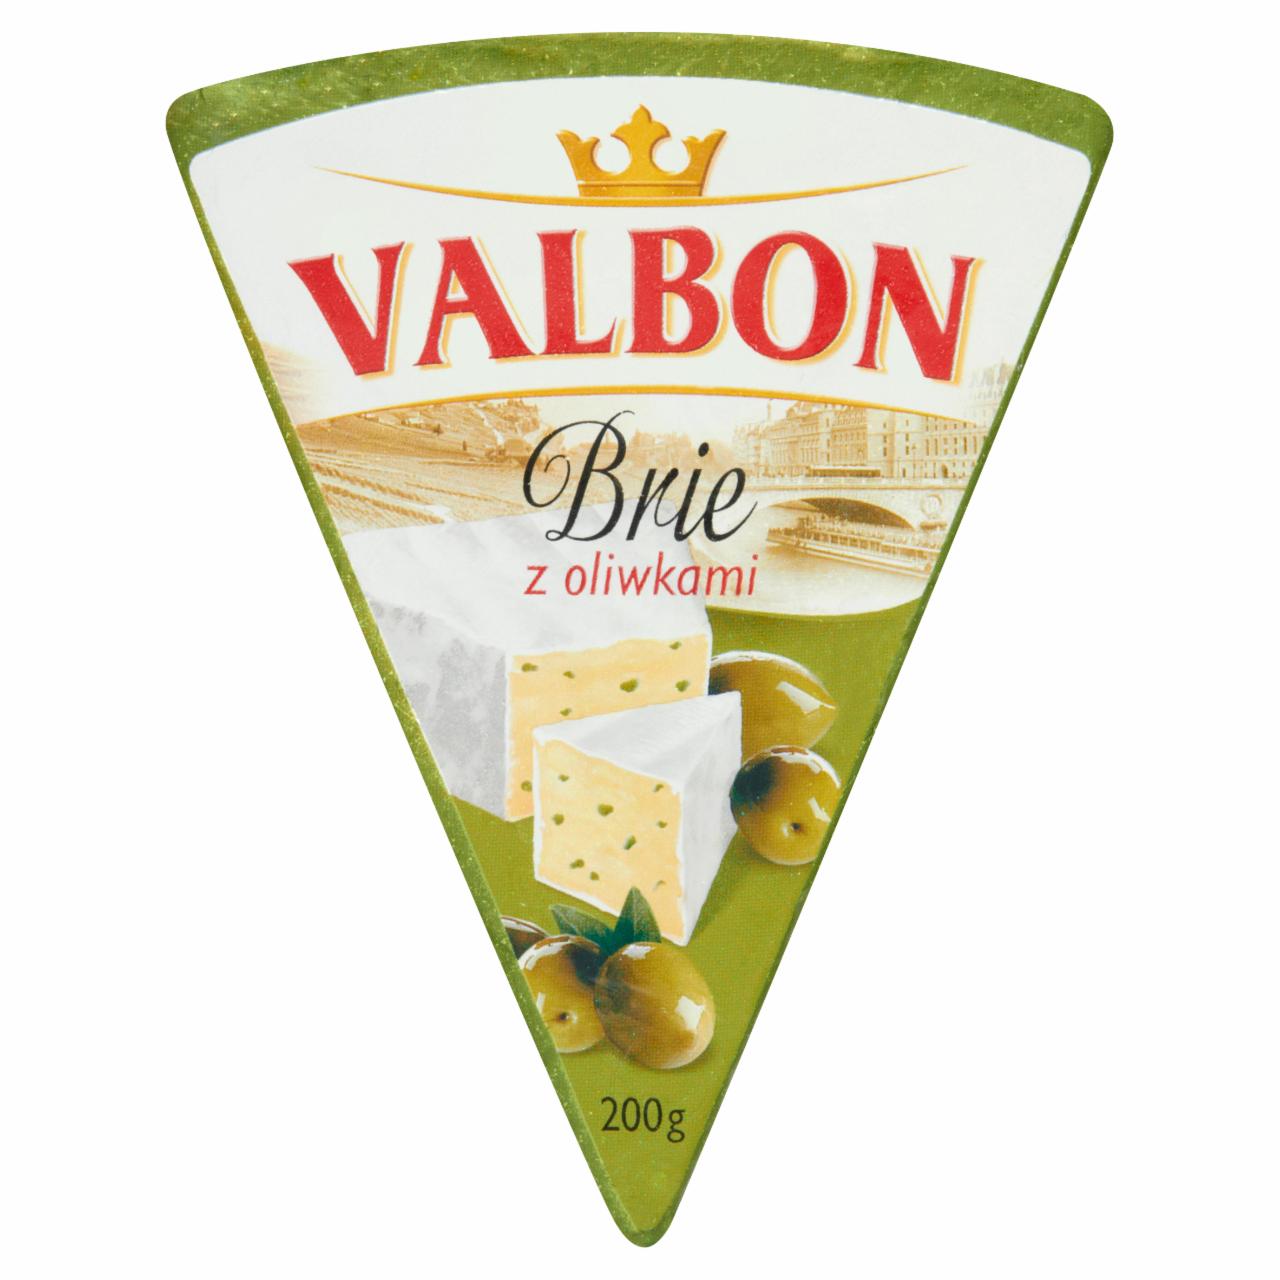 Zdjęcia - Valbon Brie z oliwkami 200 g